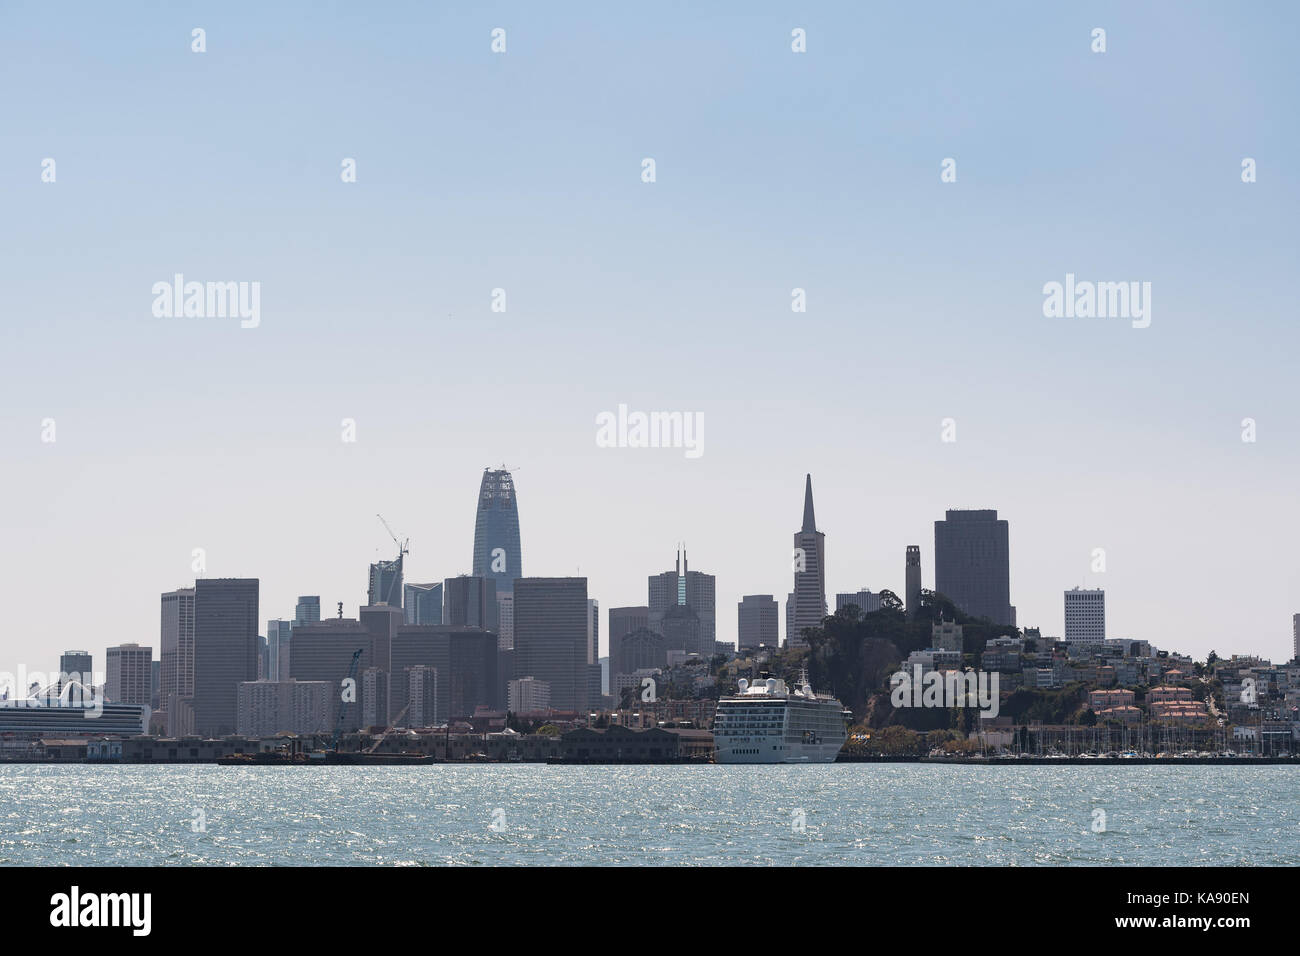 Cityscape of the San Francisco skyline, California, USA, from the San Francisco Bay Stock Photo